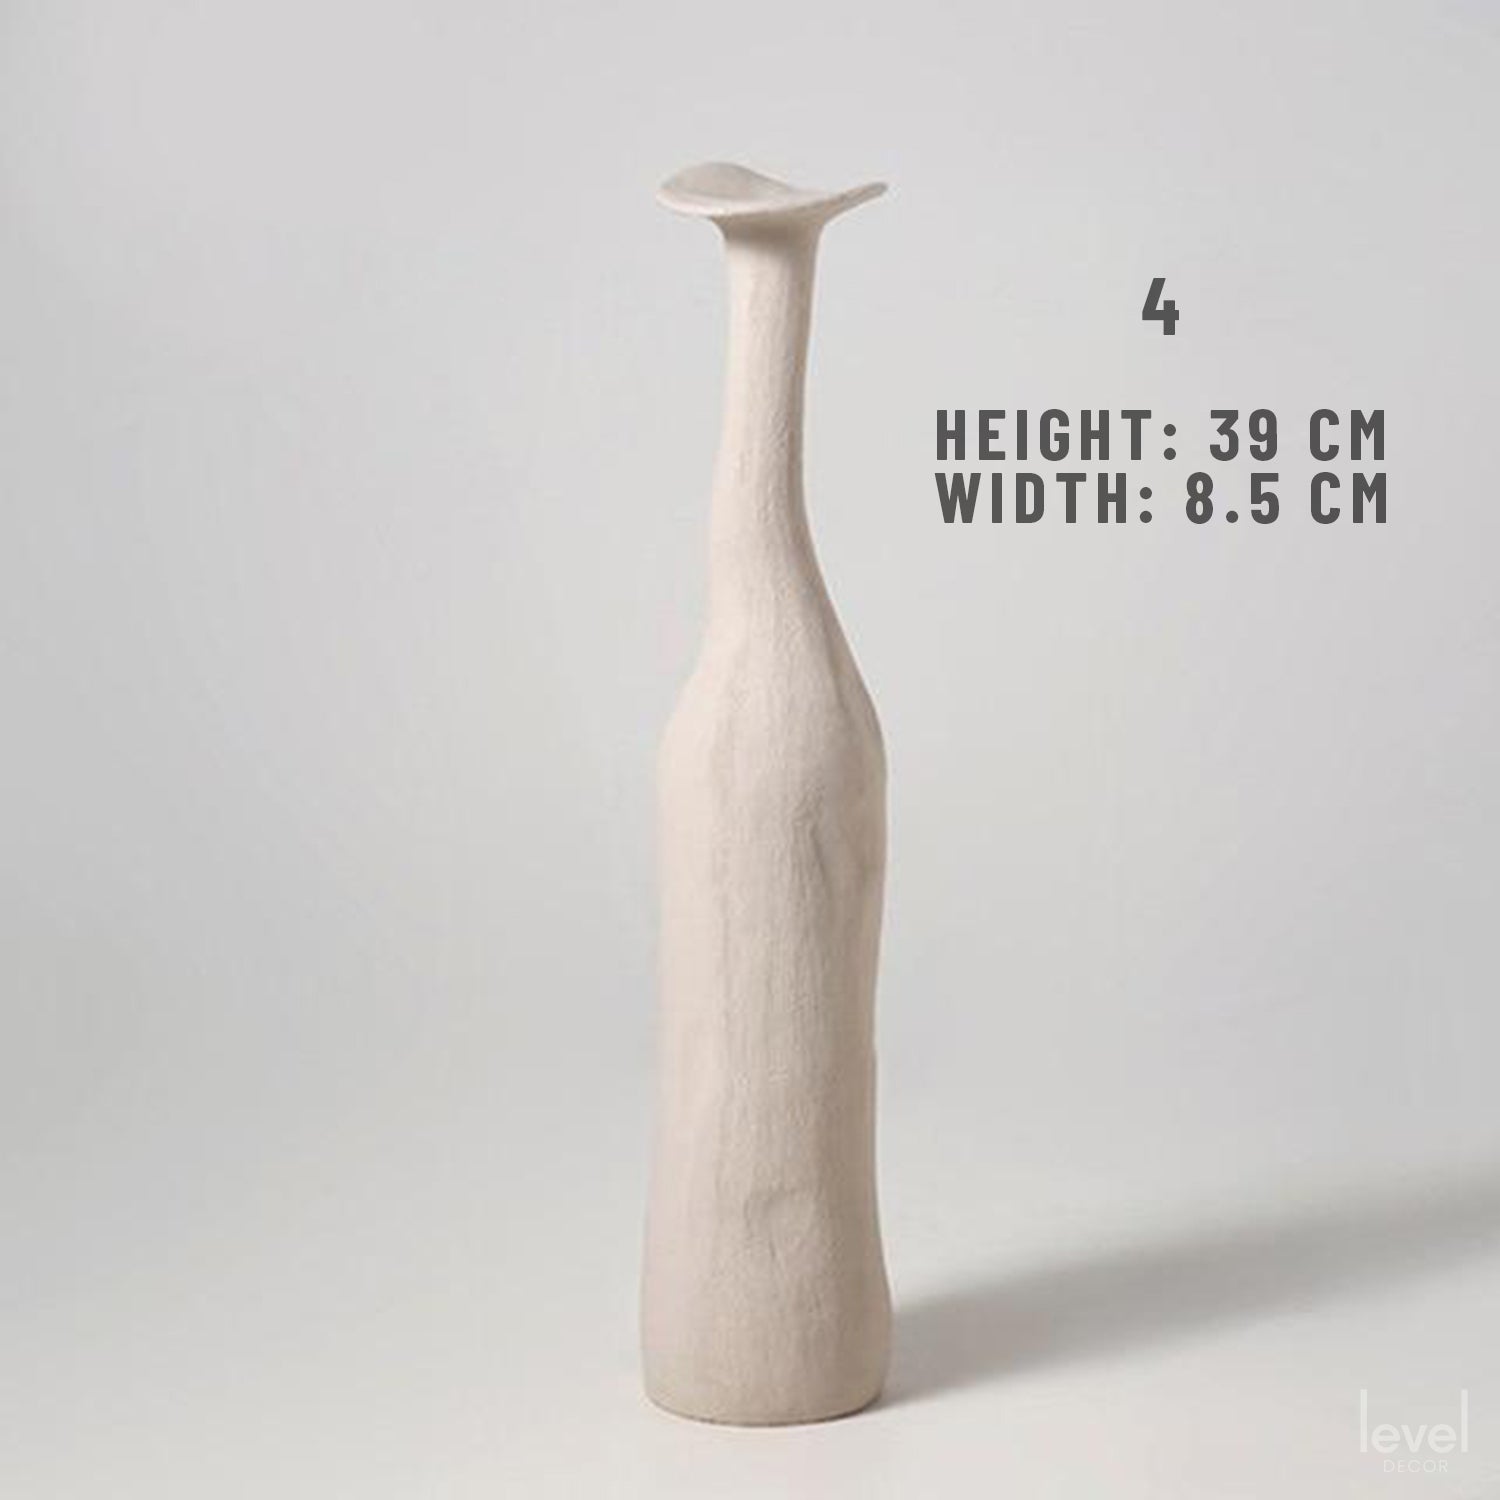 Minimalist Nordic Ceramic Morandi Colored Vases - 4 - Level Decor